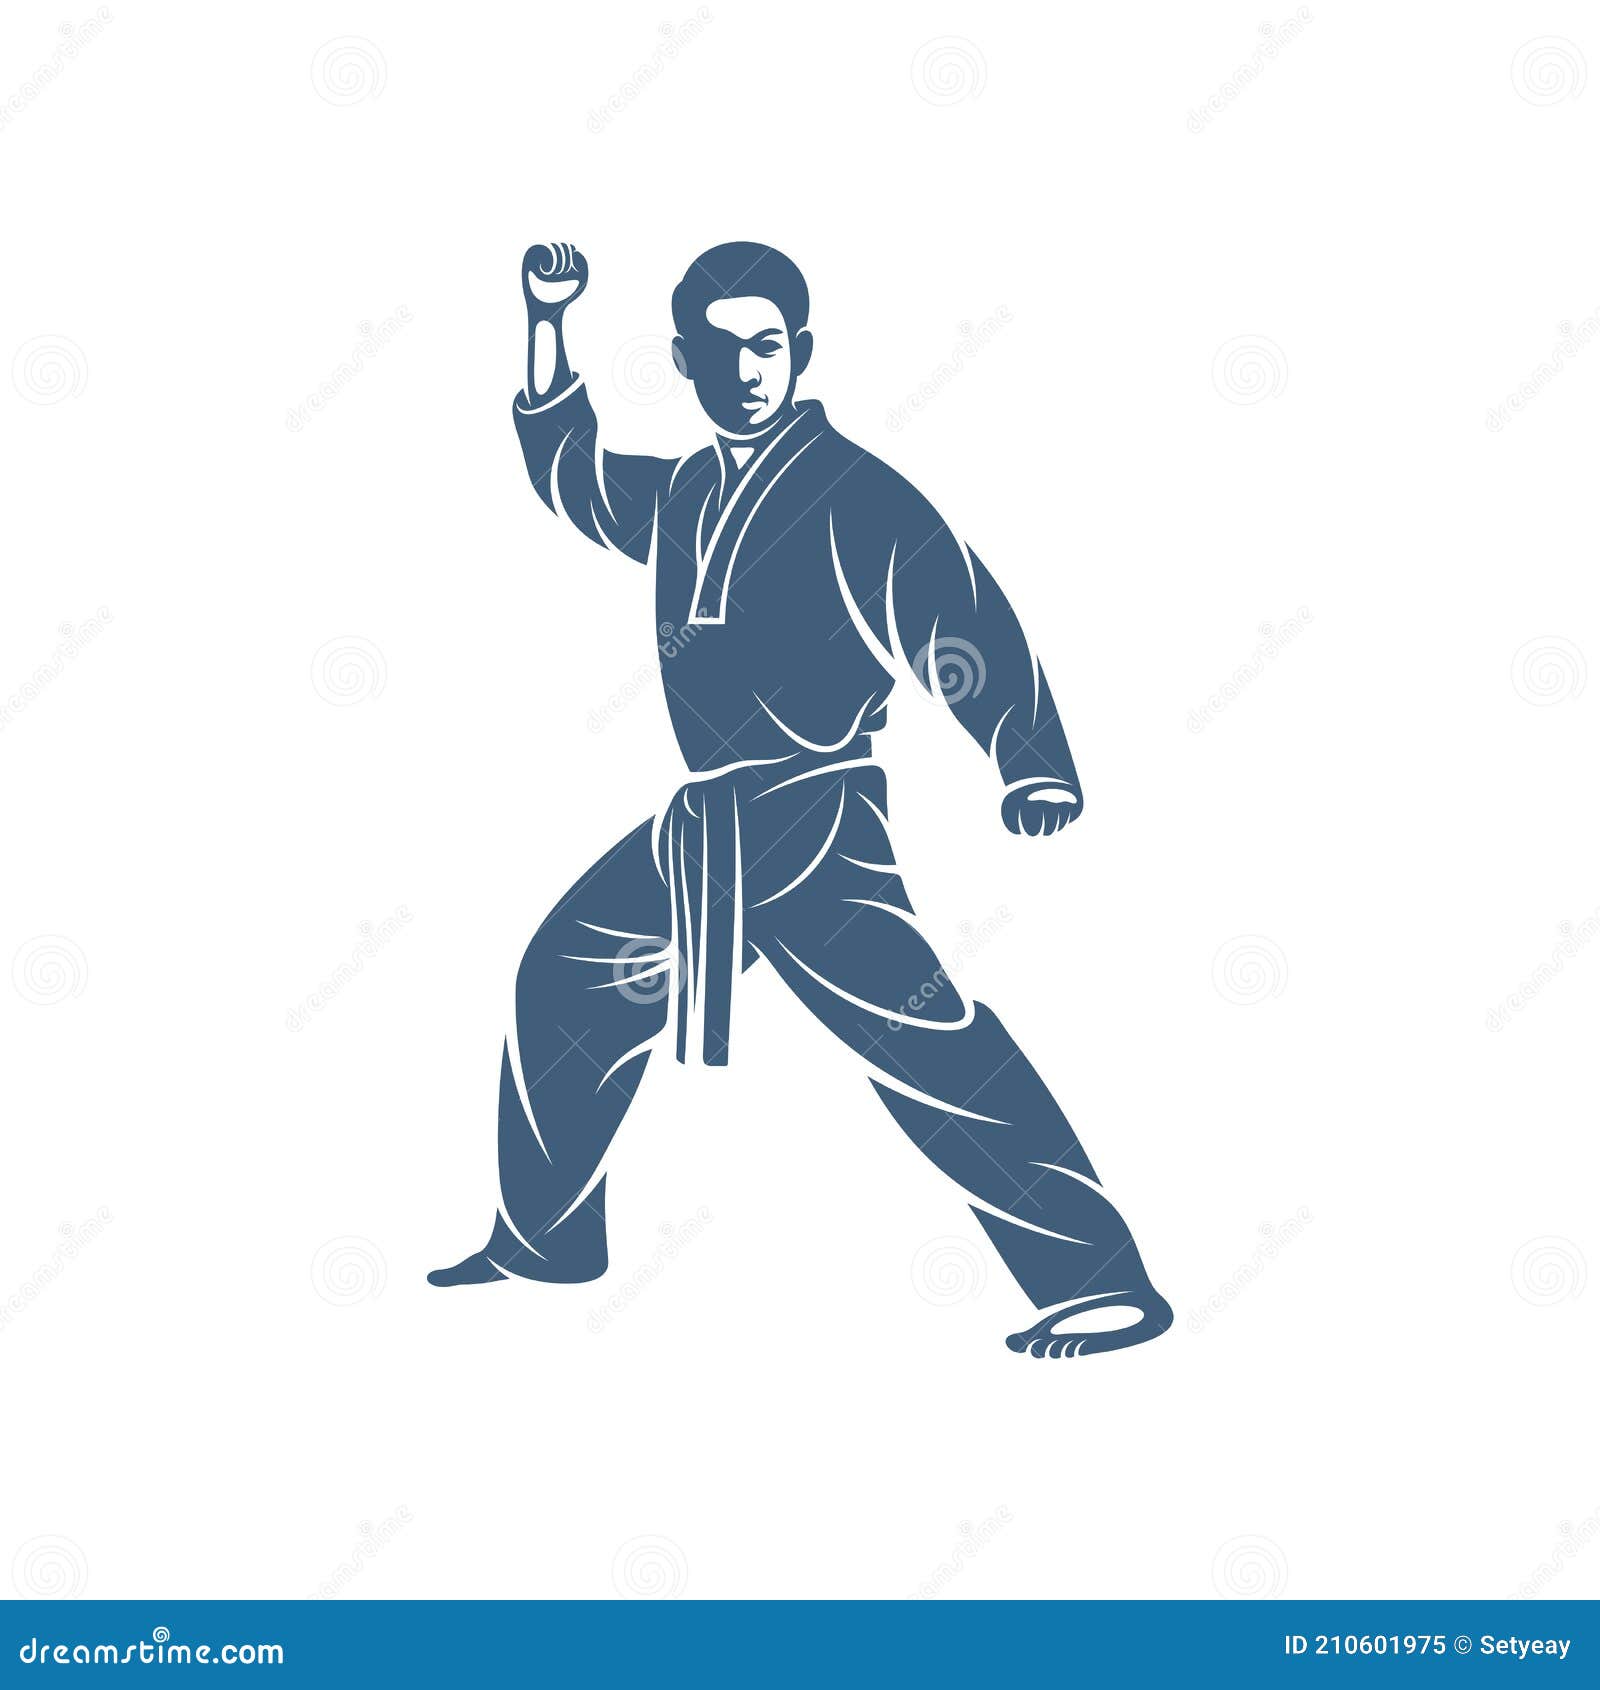 taekwondo   , creative taekwondo logo   template, icon 